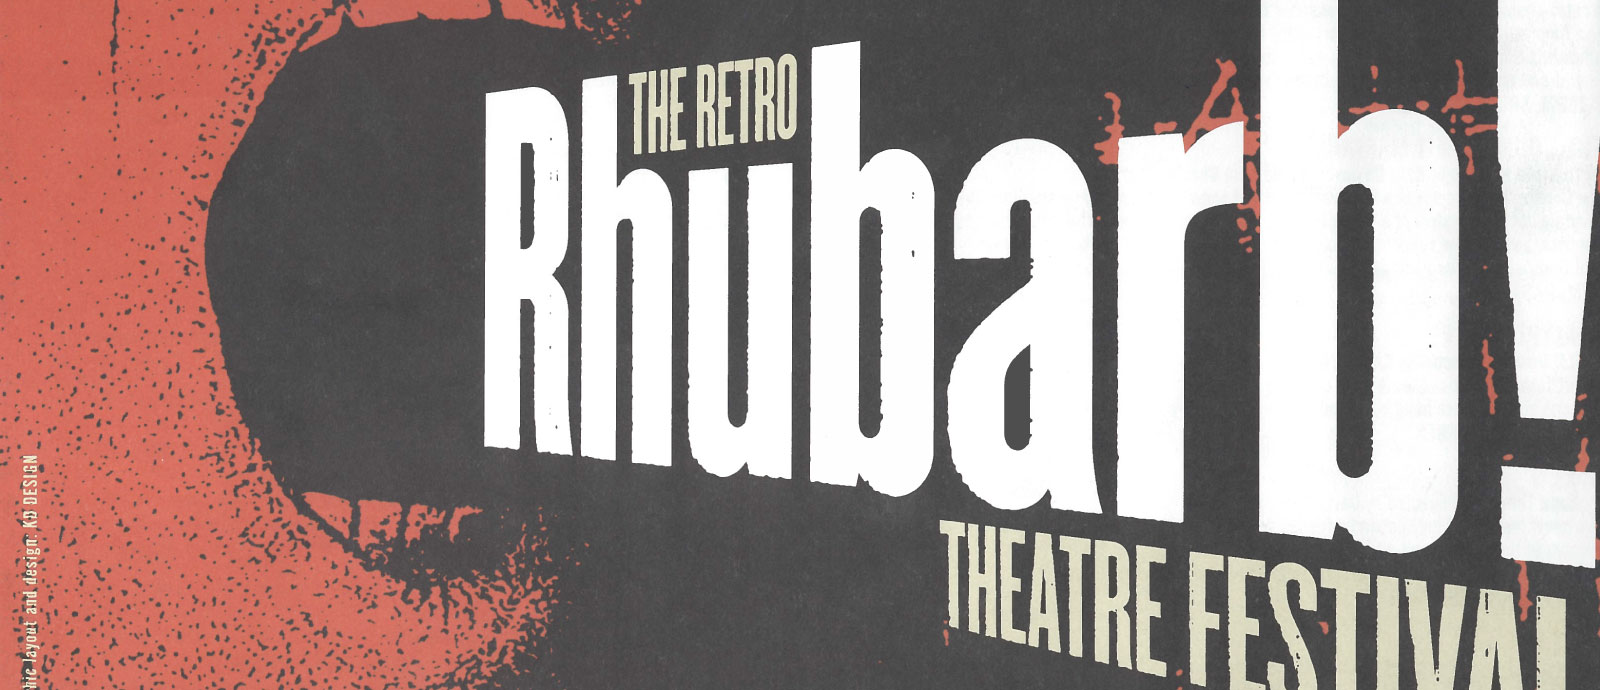 1920s Enema Porn - THE RHUBARB ARCHIVE - Buddies in Bad Times TheatreBuddies in ...